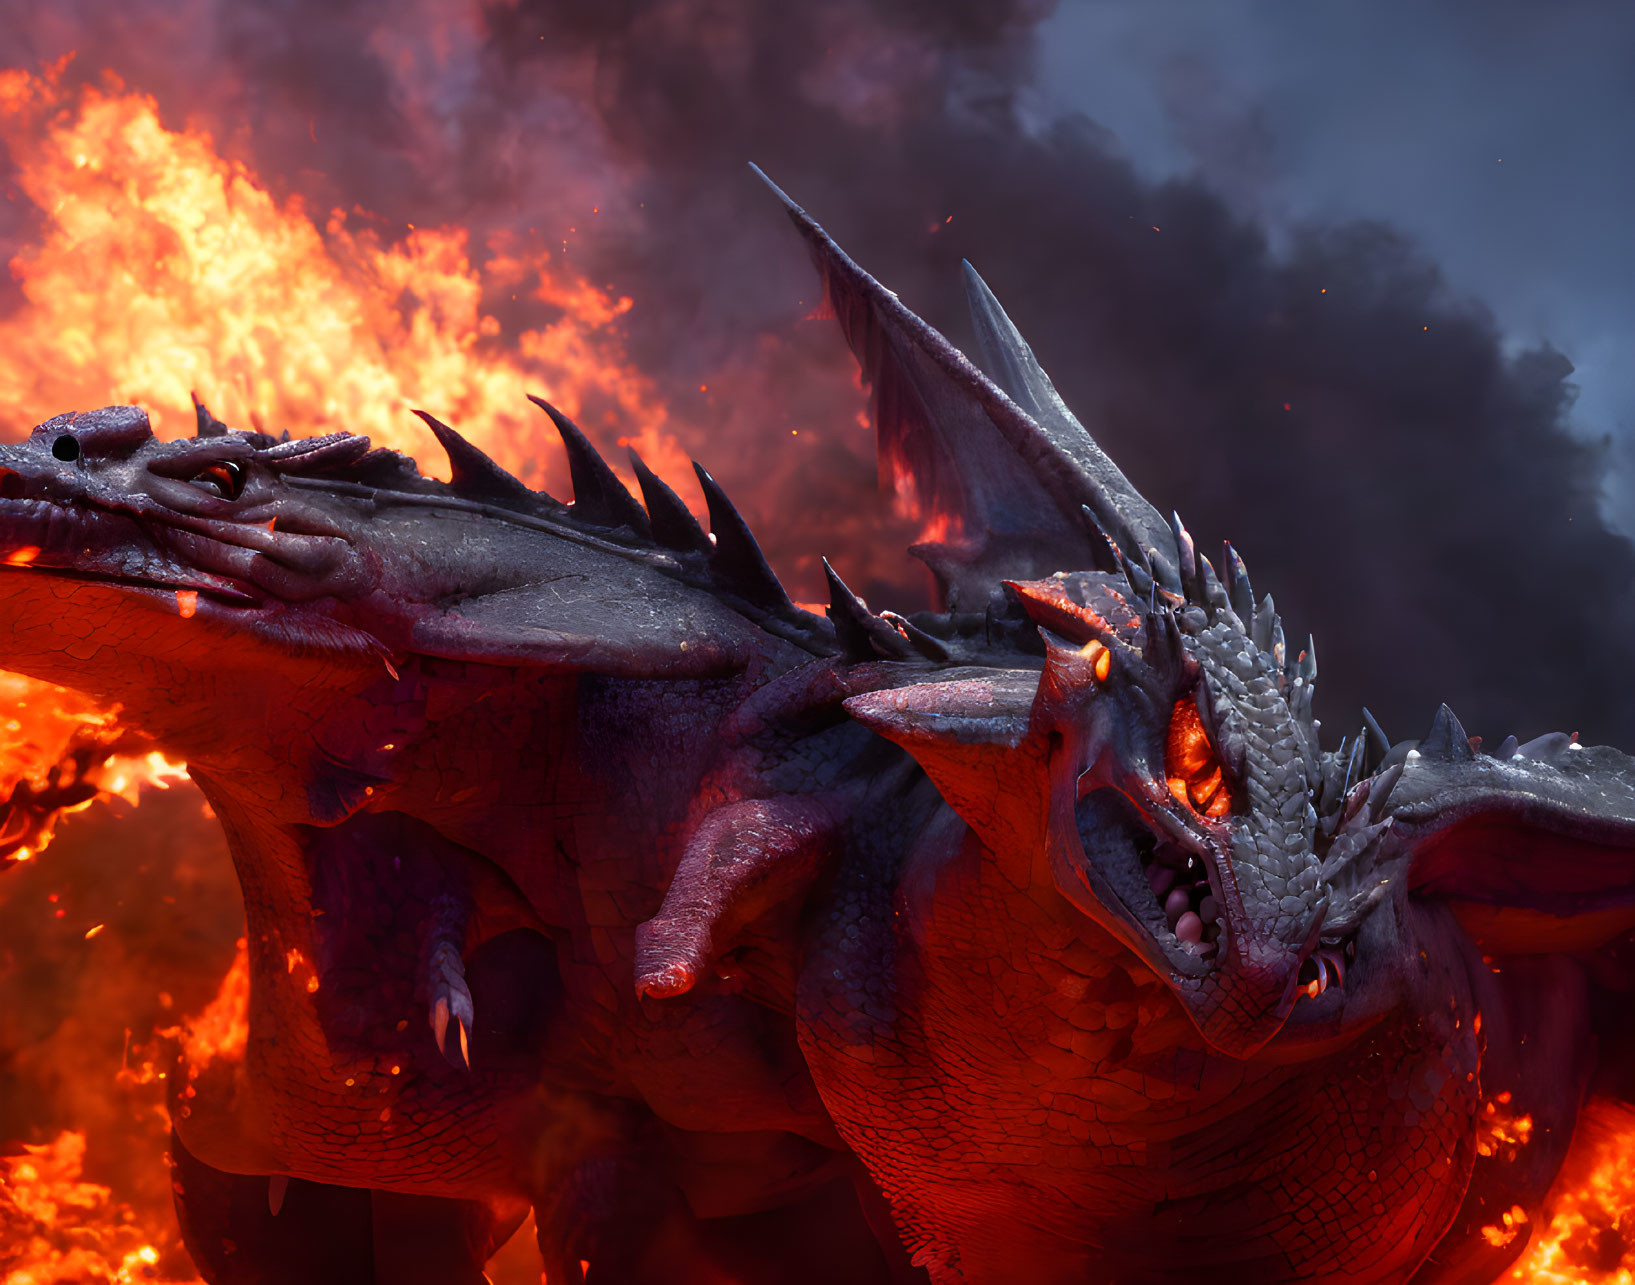 Red Three-Headed Dragon in Fiery Inferno